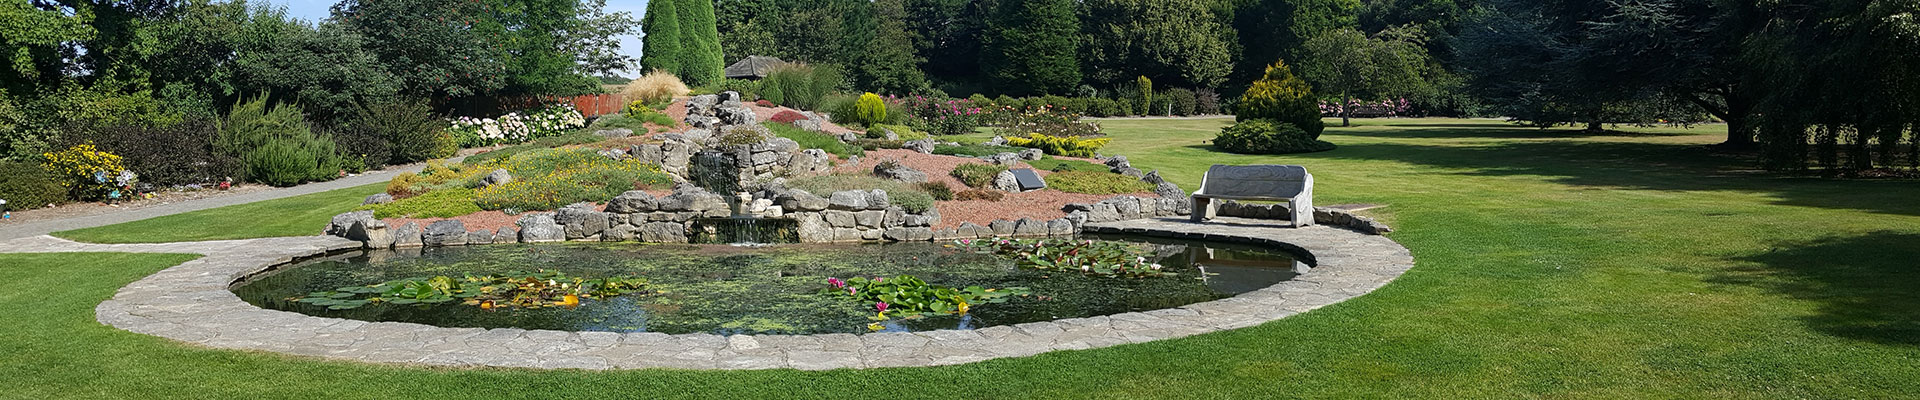 Photograph of the pond in the crematorium gardens